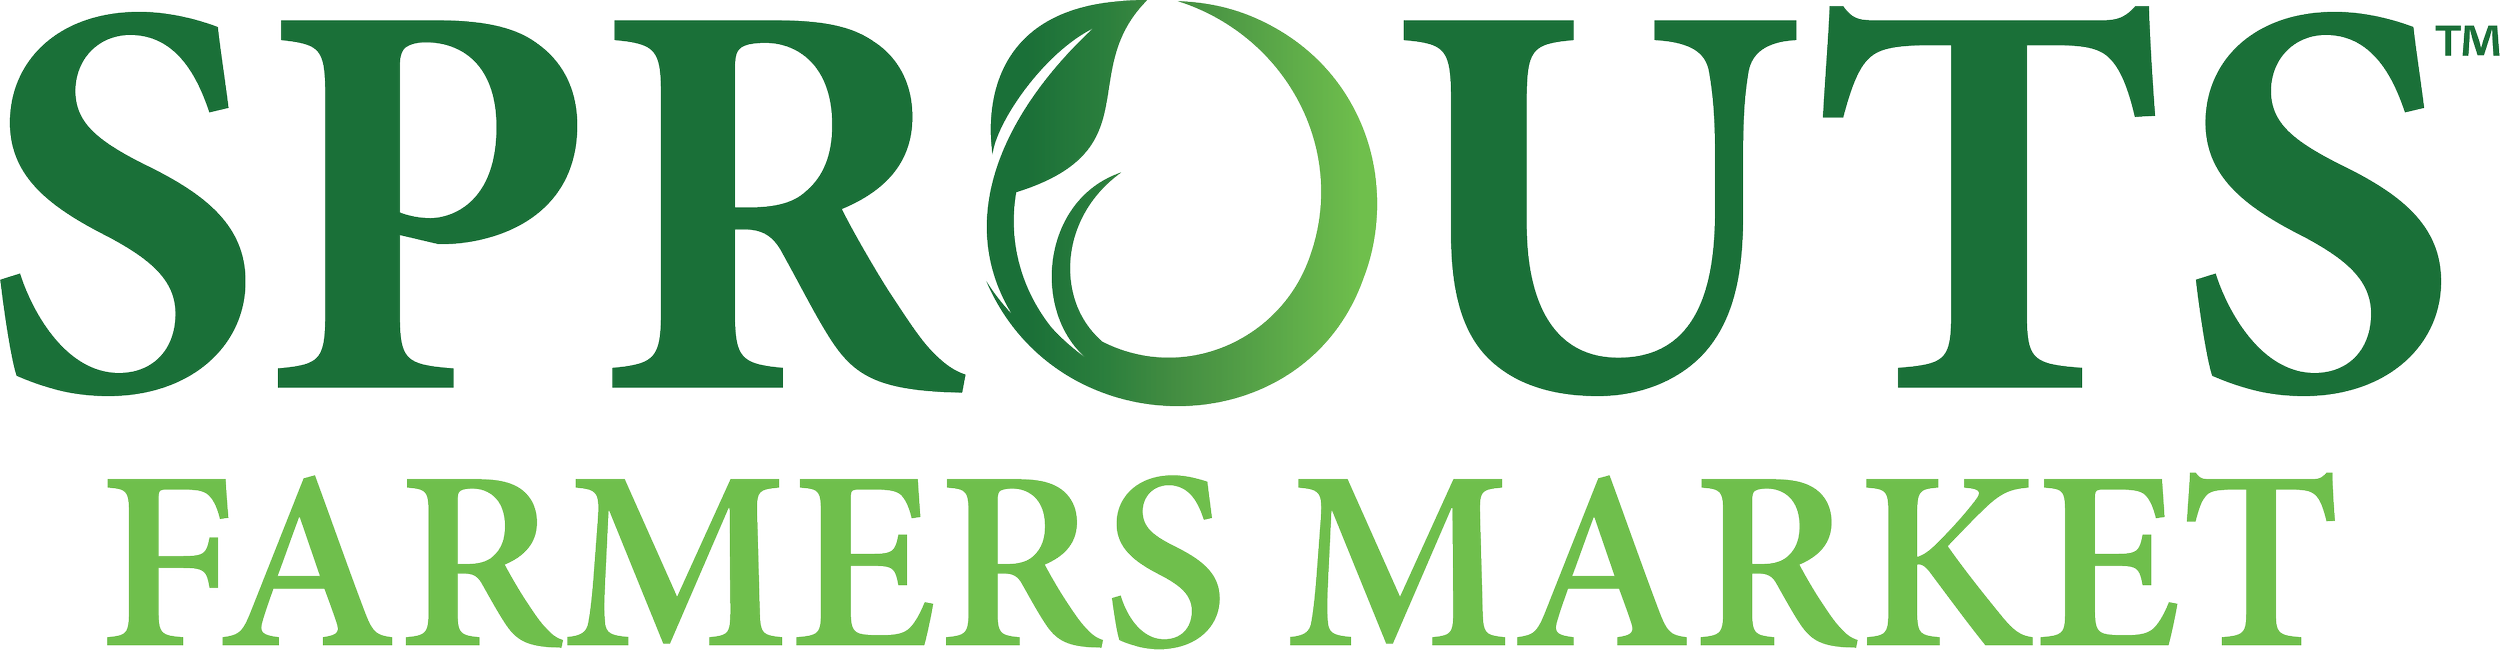 sprouts farmers markets logo